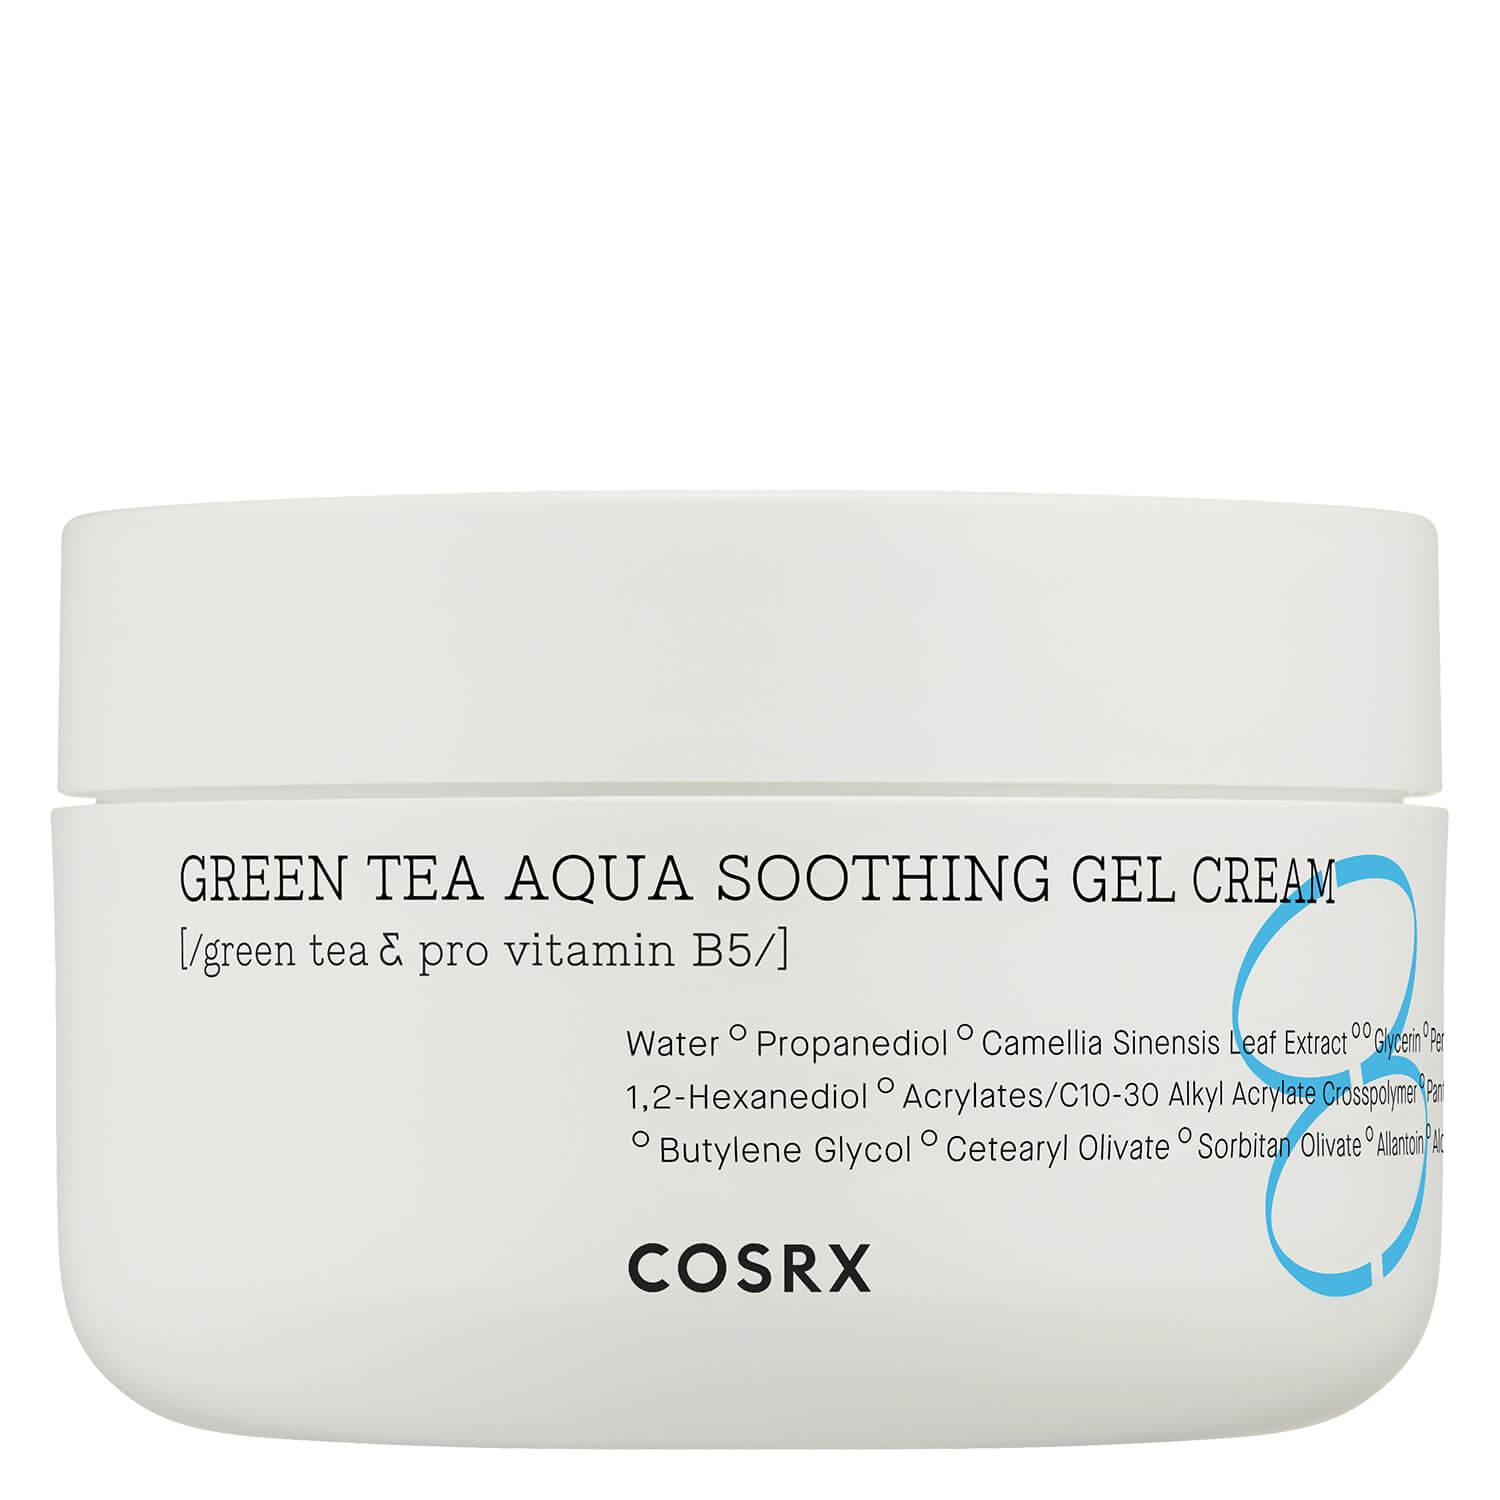 Cosrx - Green Tea Aqua Soothing Gel Cream